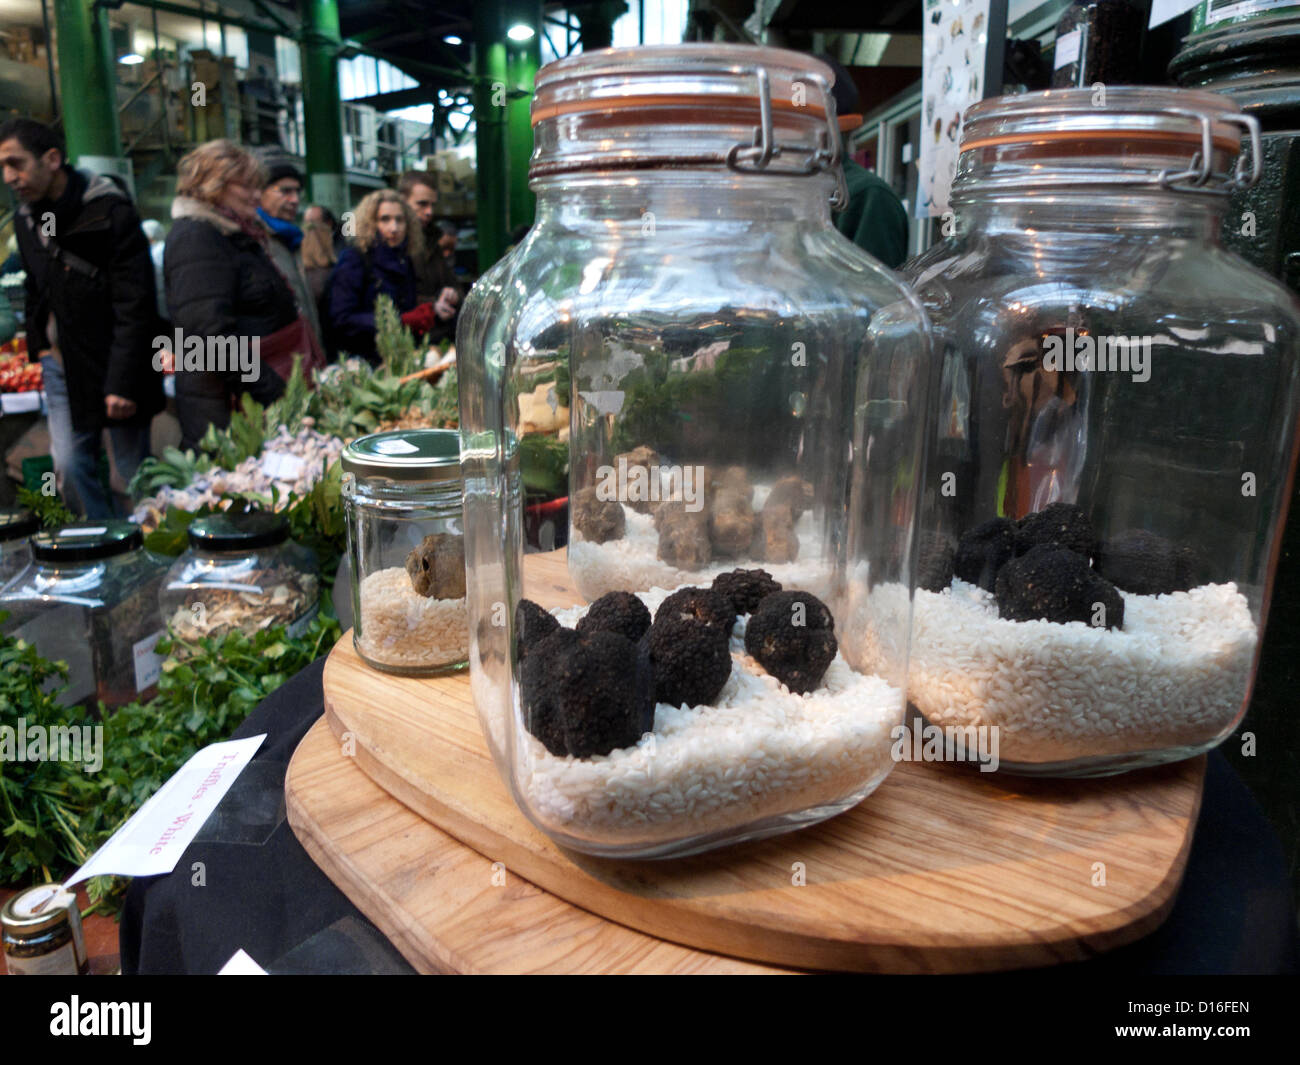 Black and white fresh truffles from Molise Italy displayed in glass jars Borough Market, London Bridge, London  UK KATHY DEWITT Stock Photo